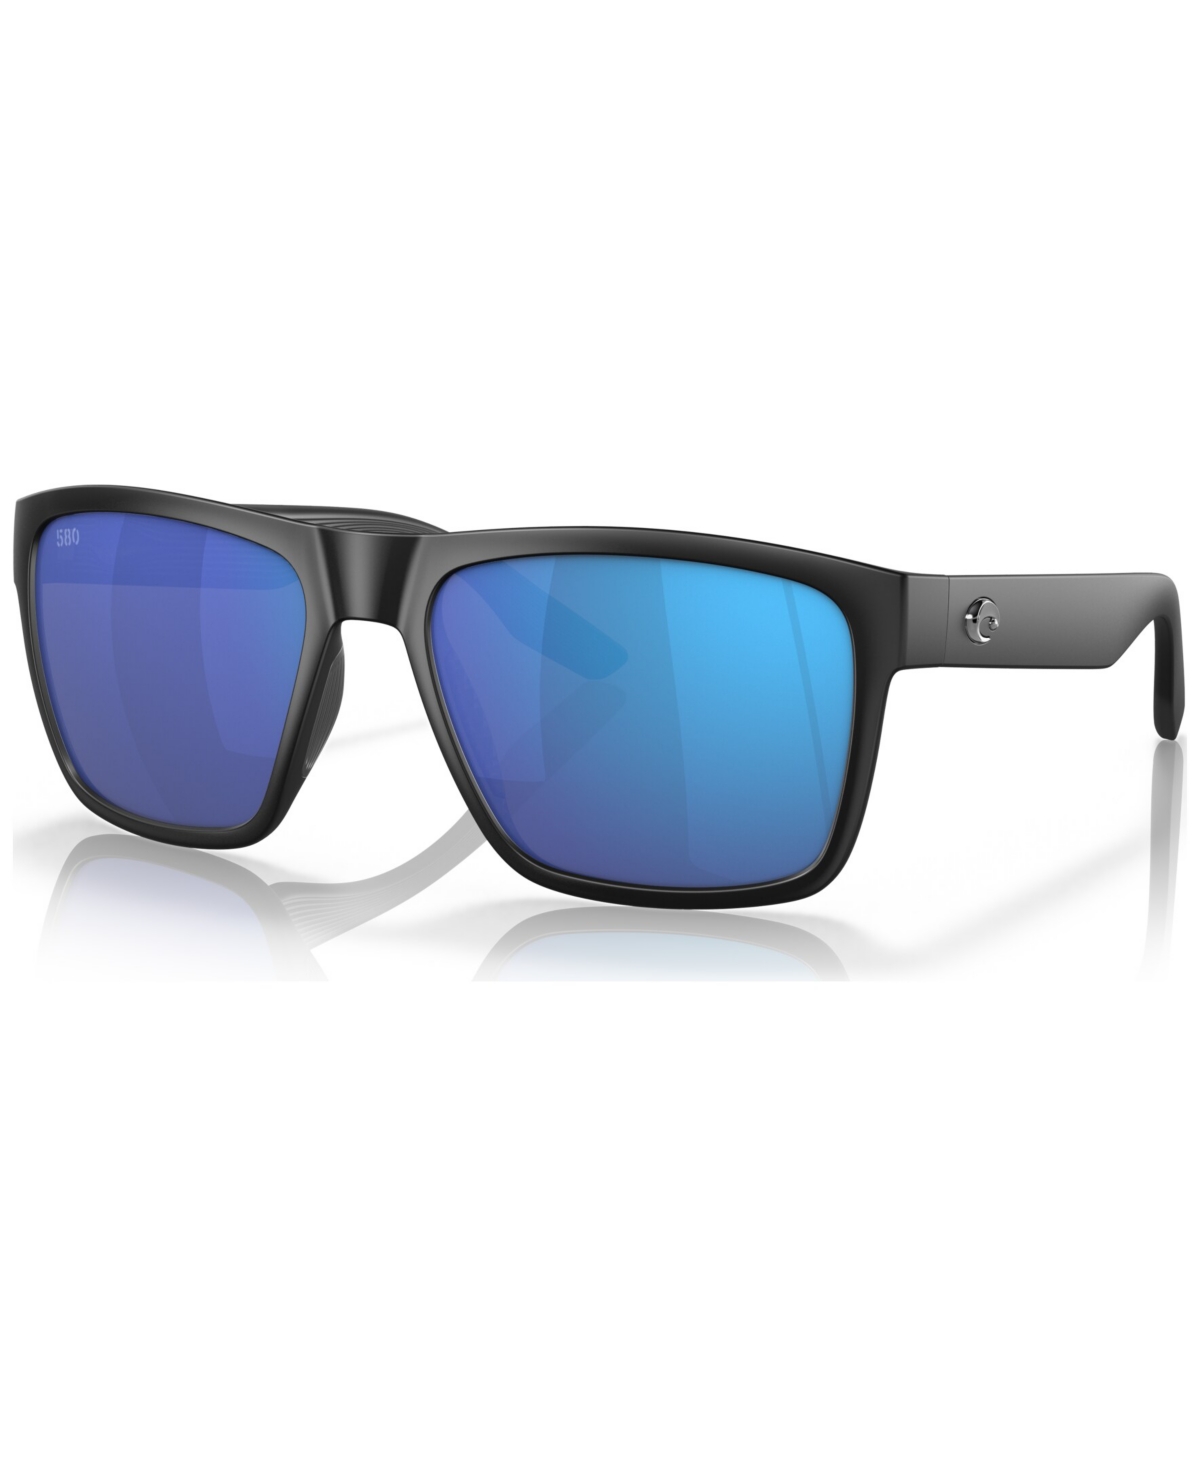 Men's Polarized Sunglasses, 6S905059-zp - Matte Black